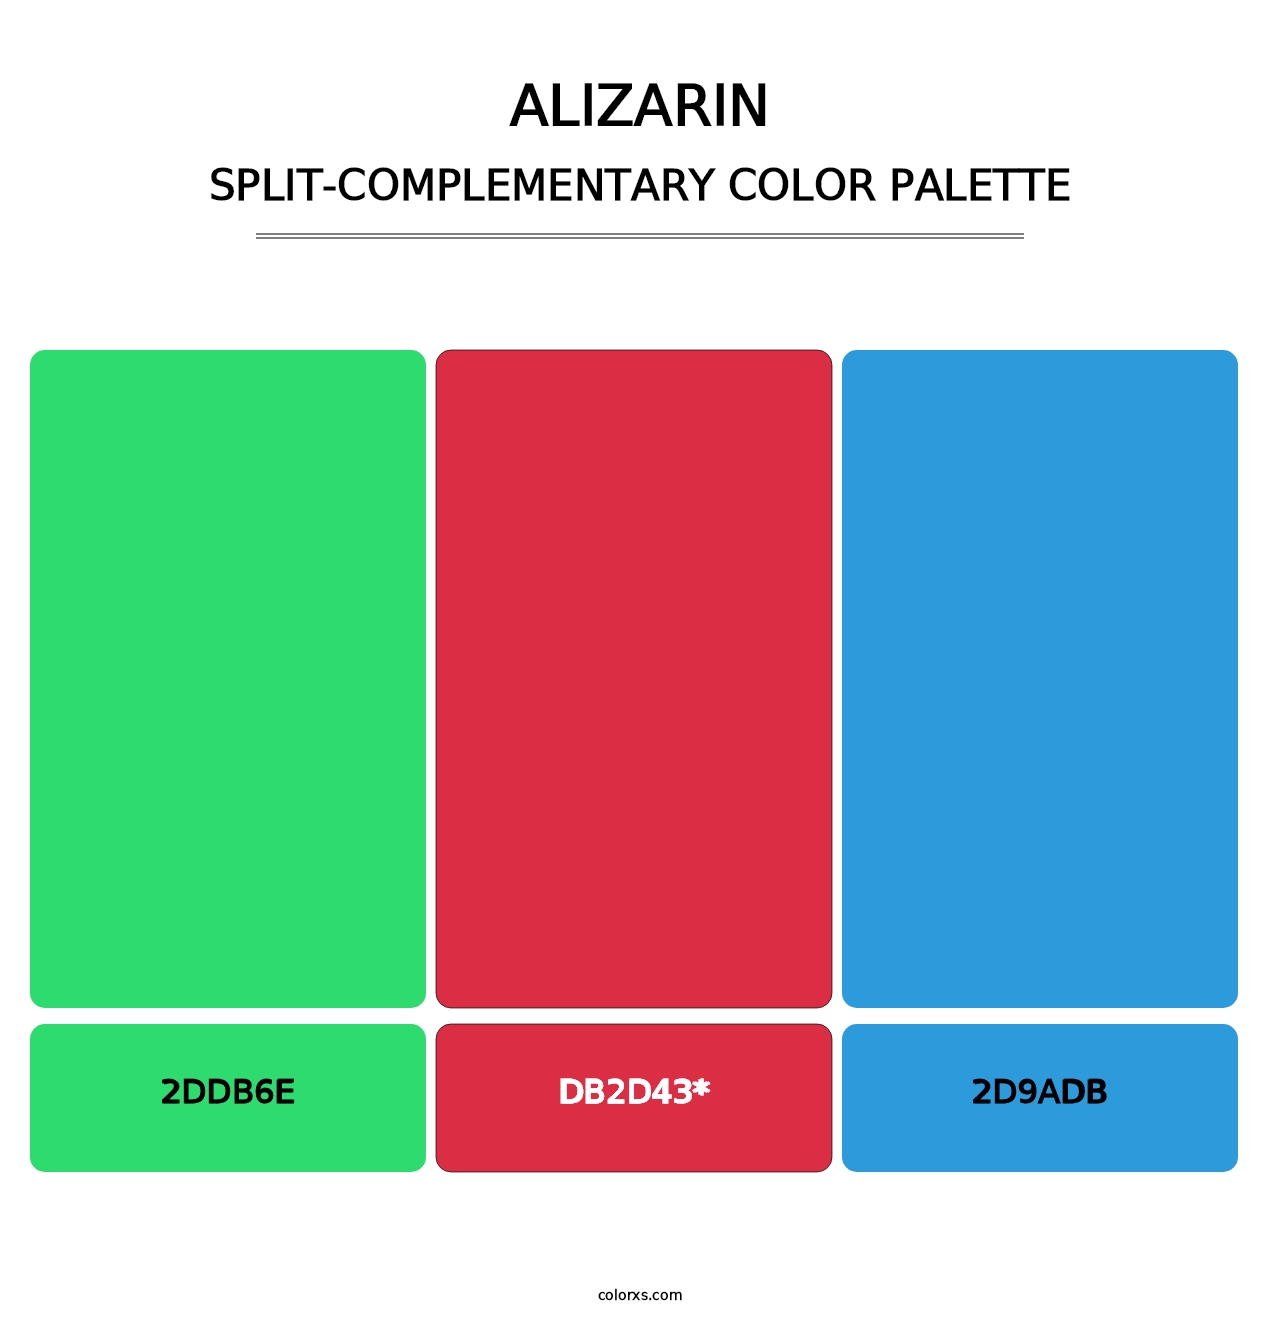 Alizarin - Split-Complementary Color Palette